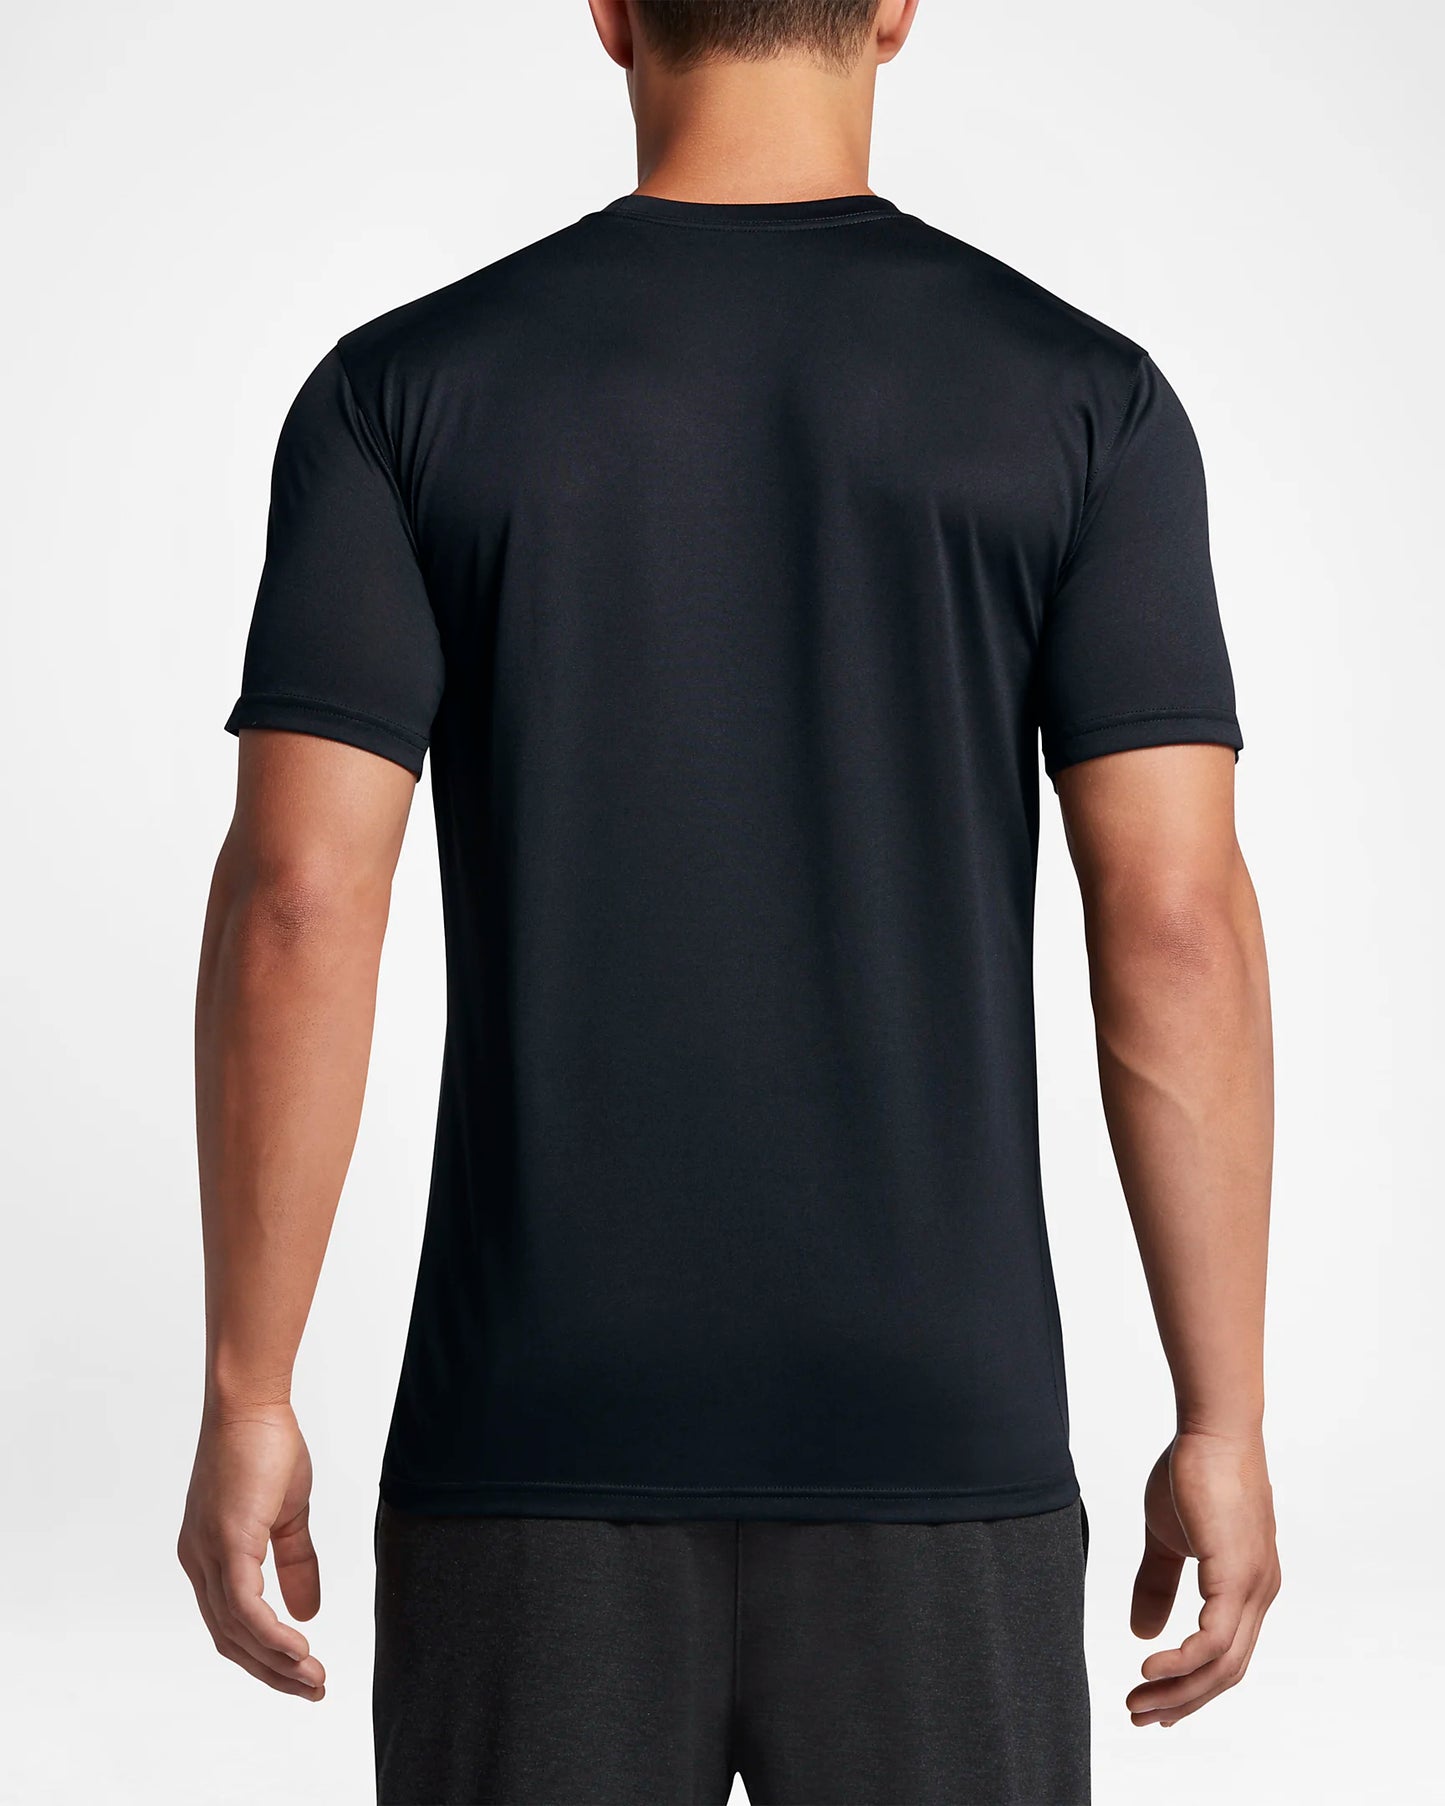 Nike Men's Dri-FIT Legend Training T-Shirt, Black/Black/Matte Silver